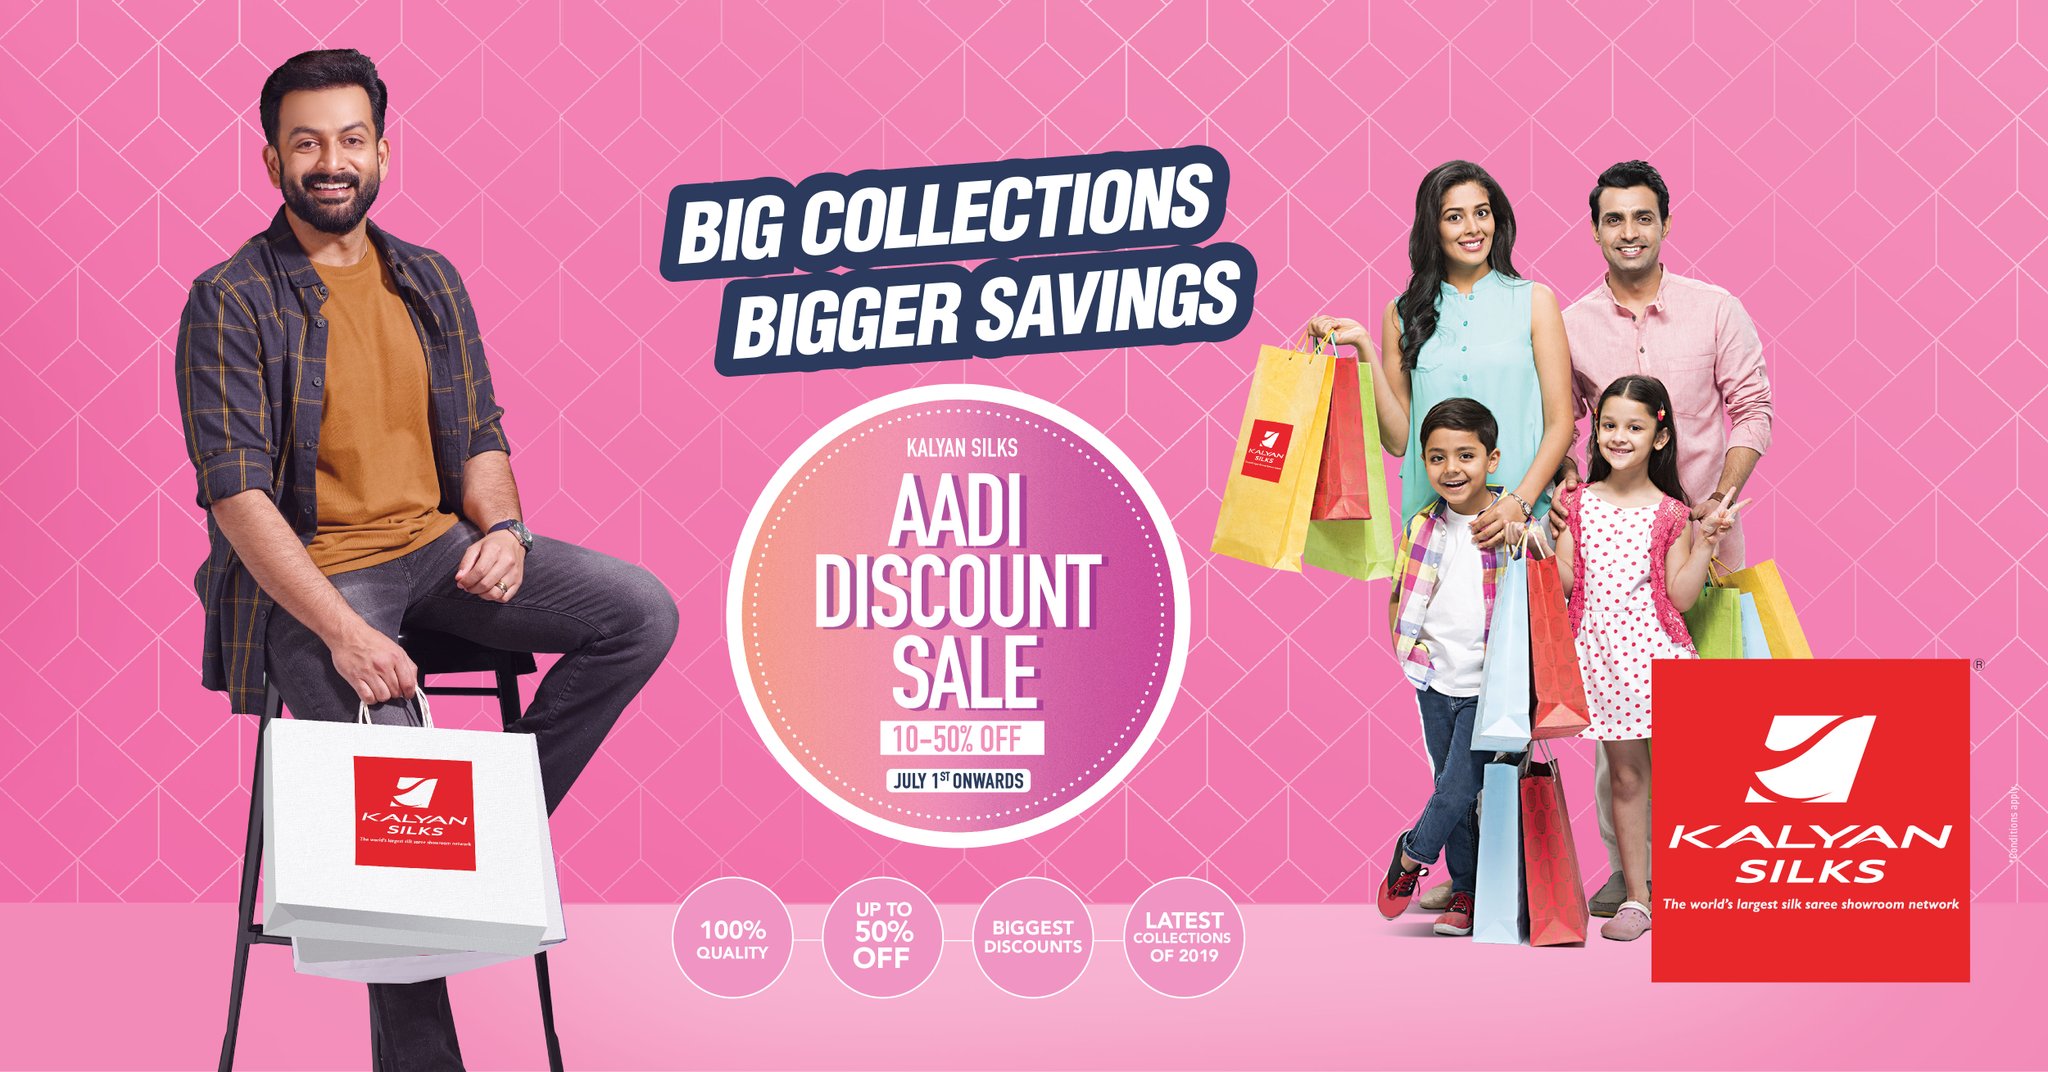 Kalyan Silks - Kalyan Silks Aadi Sale. Get 10-50% discounts on the